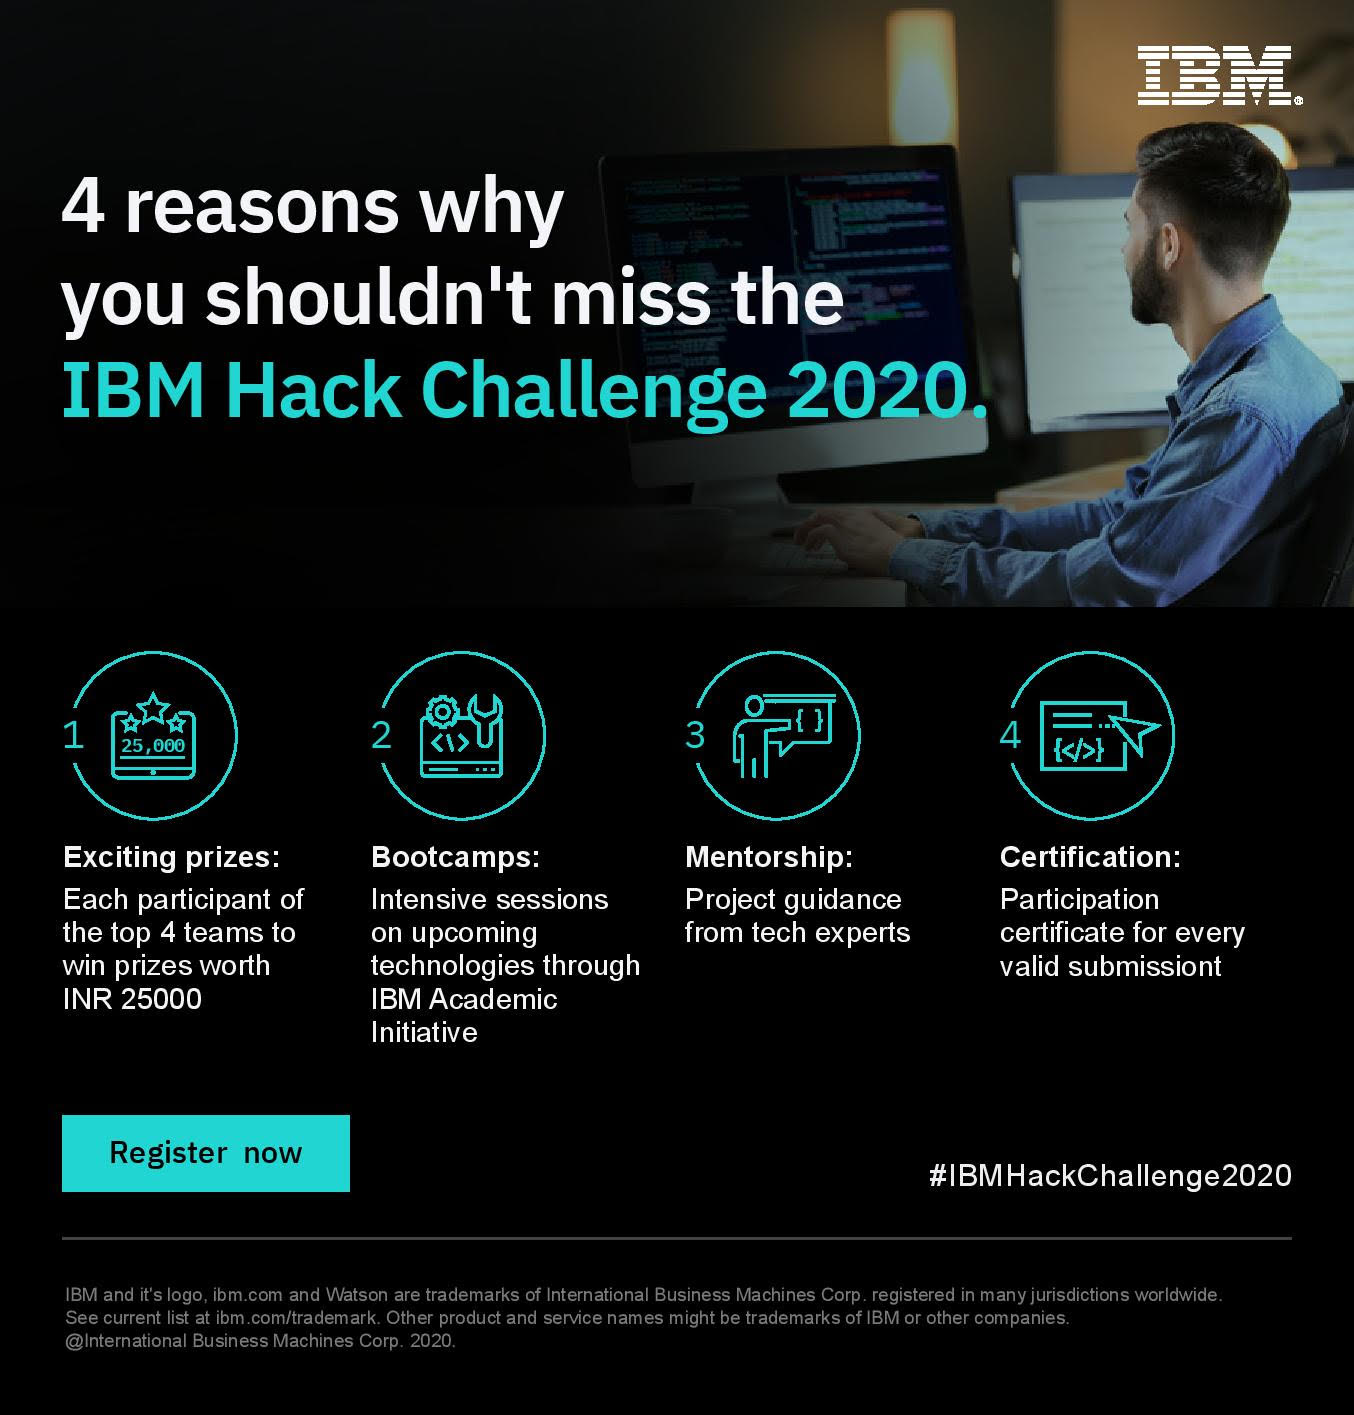 IBM Hack Challenge 2020 online learning and handson technical